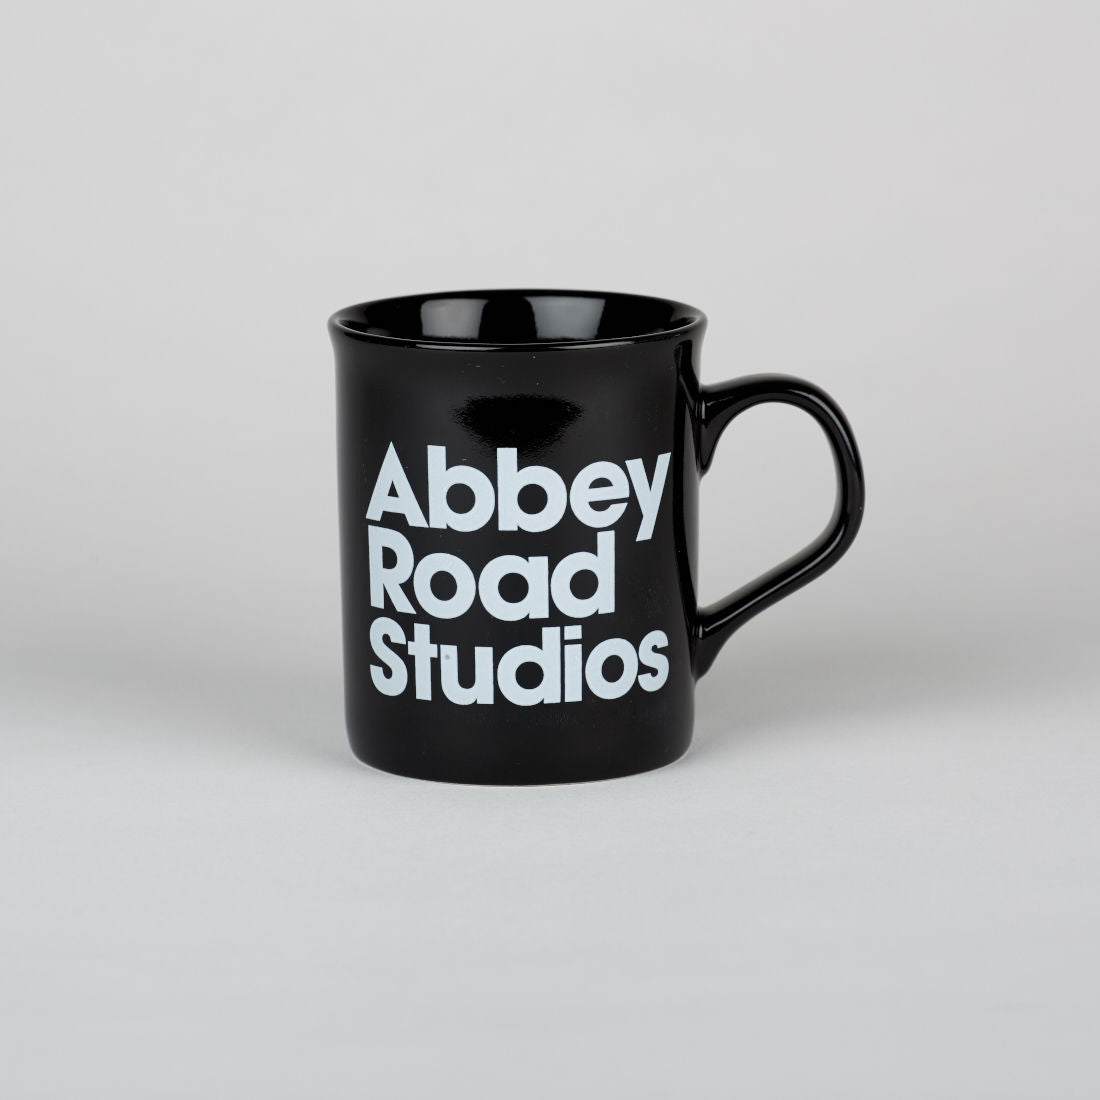 Abbey Road Studios - Black Abbey Road Studios Mug